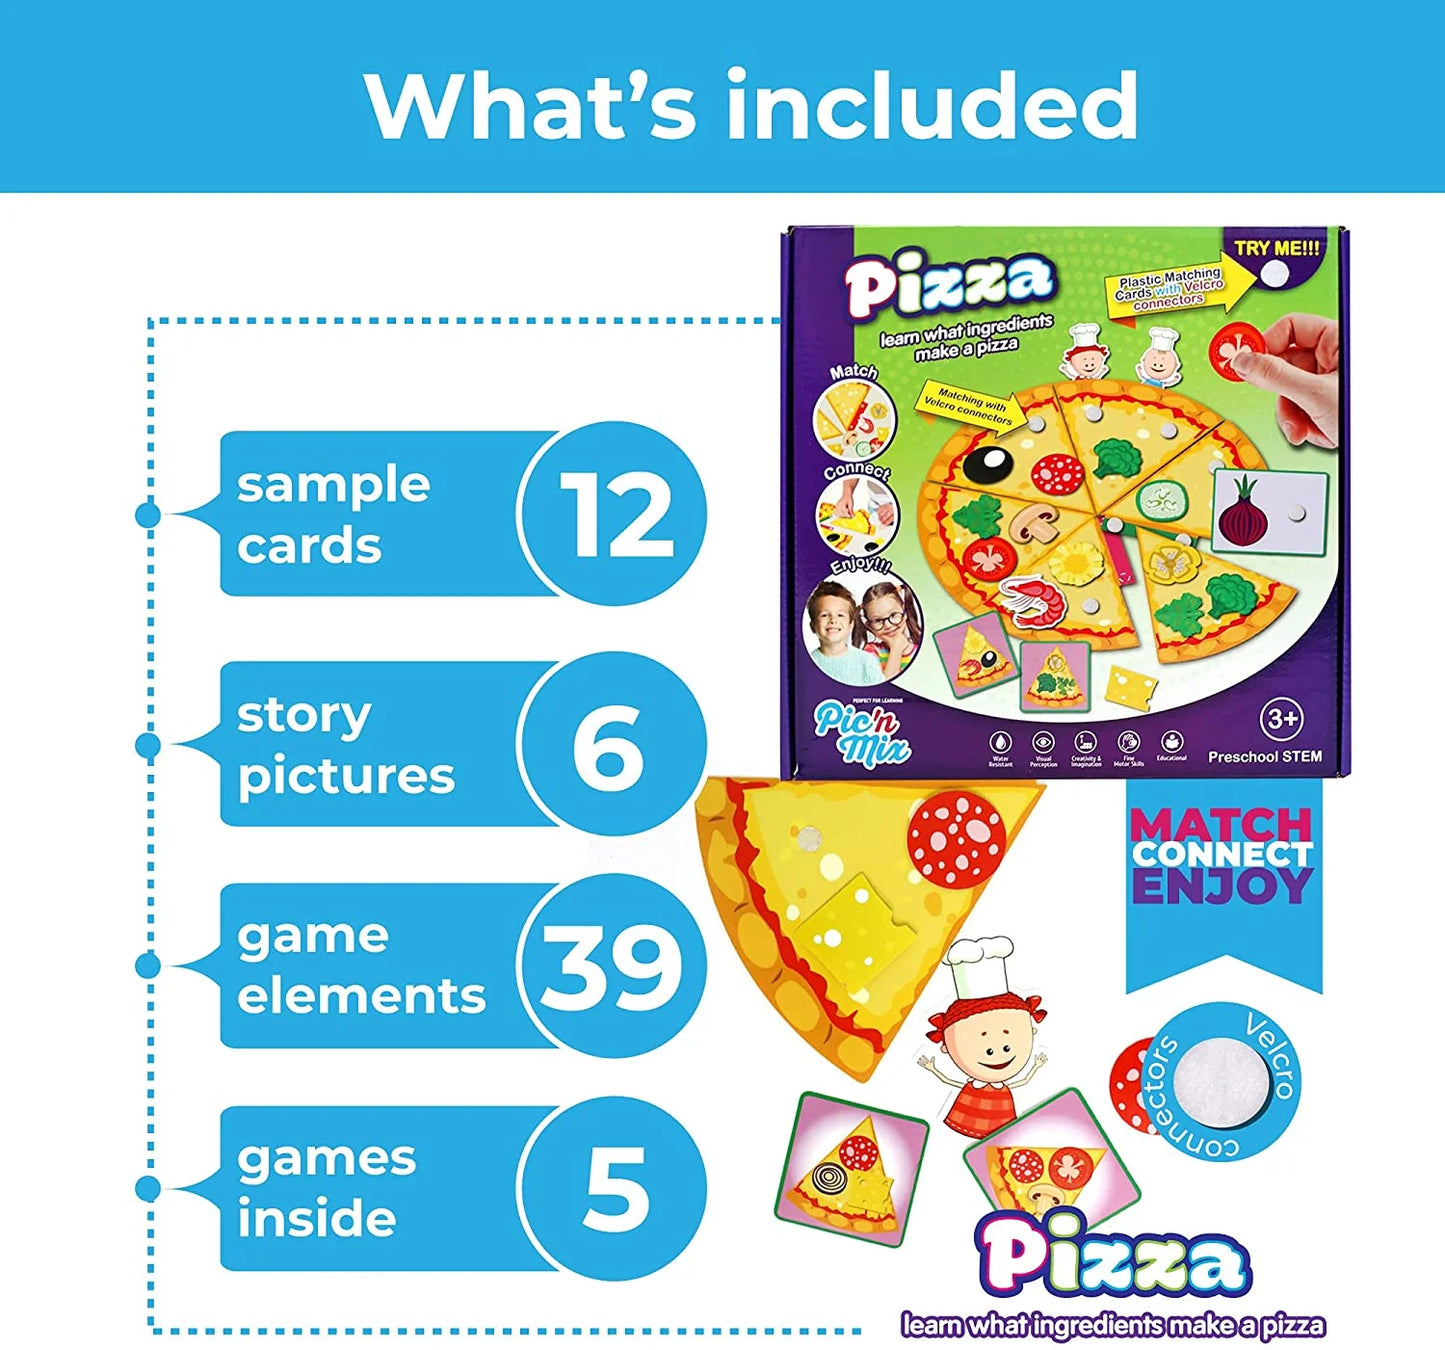 Pizza Learning Activity Kit